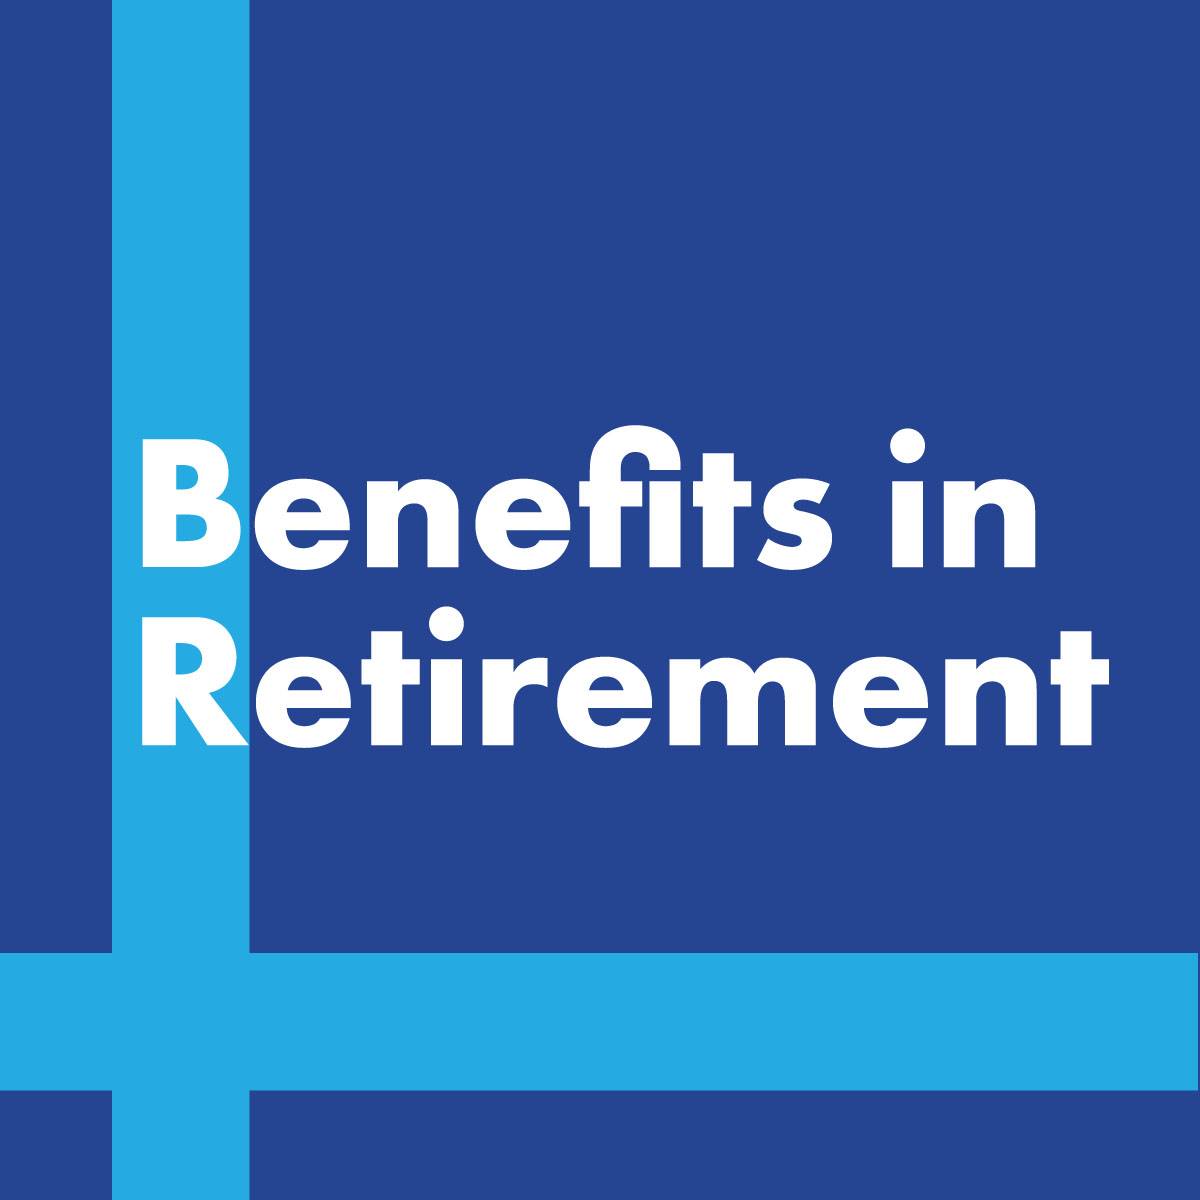 Text Benefits in Retirement